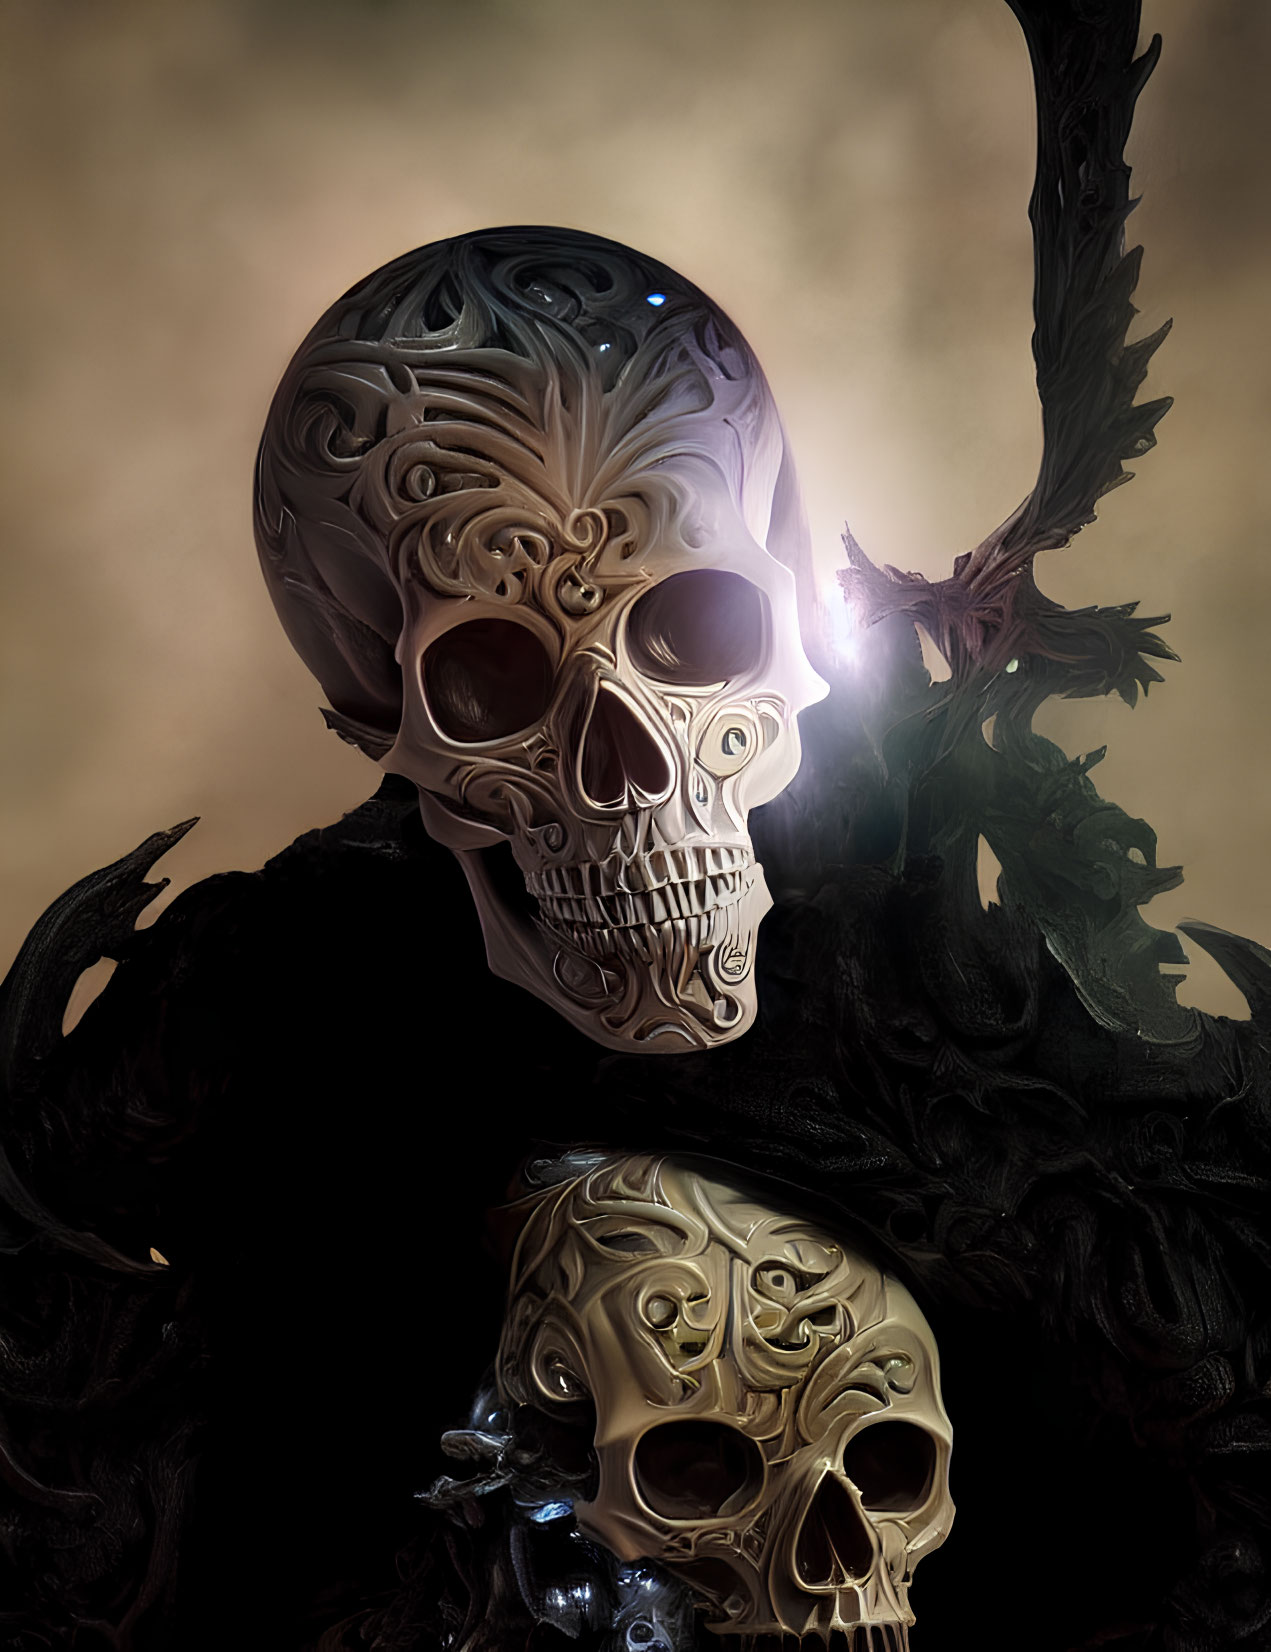 Intricate Metallic Skull Half-Submerged in Darkness